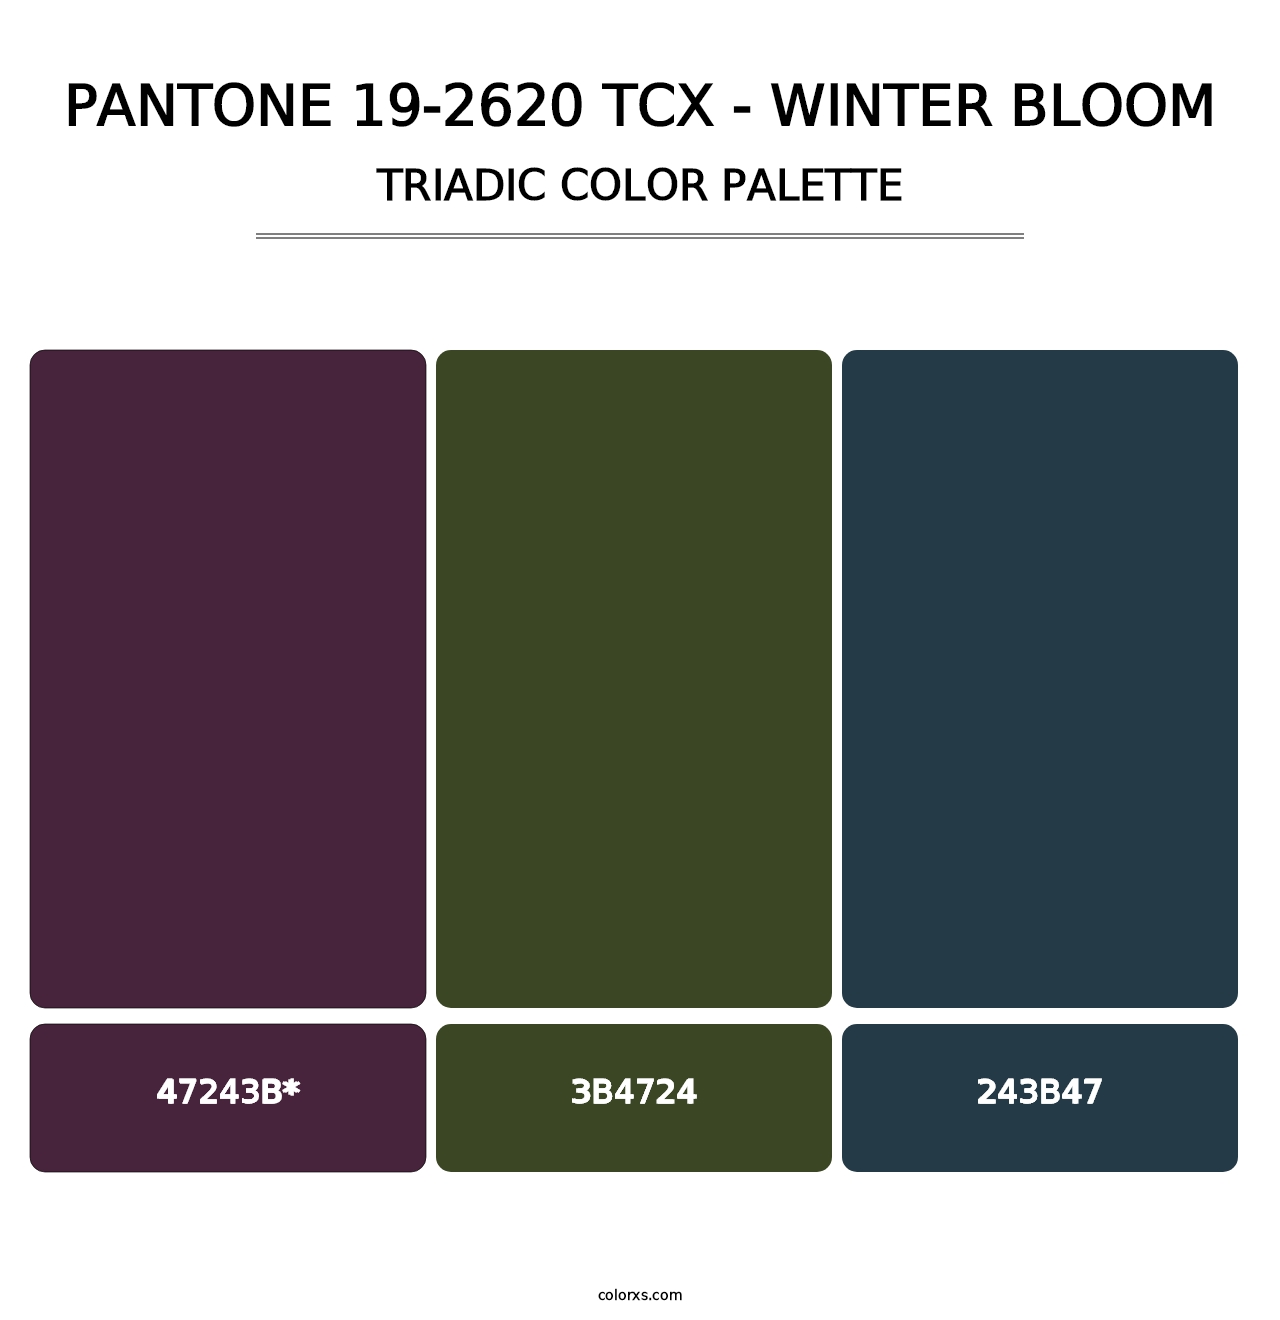 PANTONE 19-2620 TCX - Winter Bloom - Triadic Color Palette